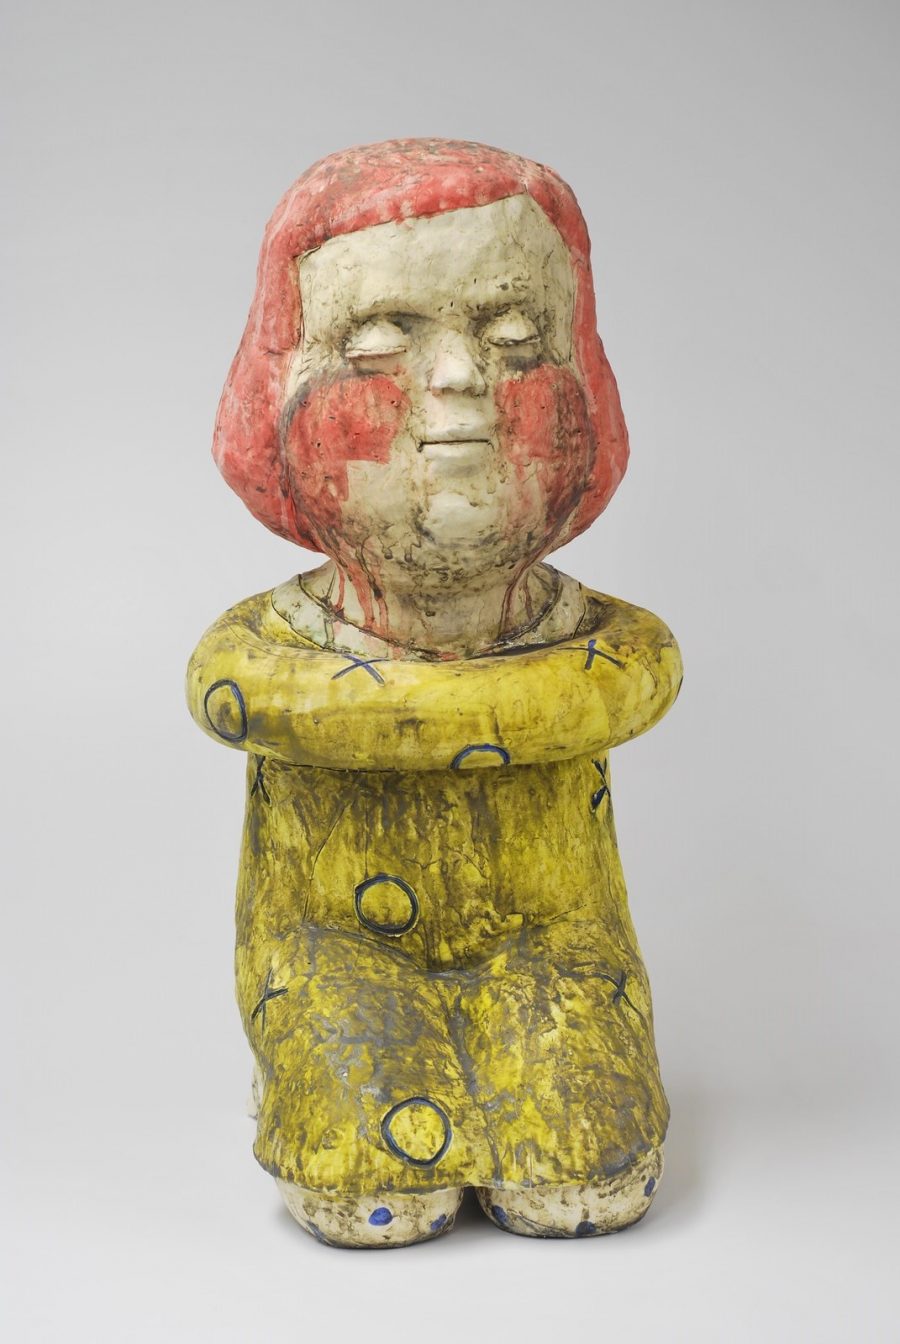 Seated figure (red head seated girl figure) - Title: Seated figure (red head seated girl figure)